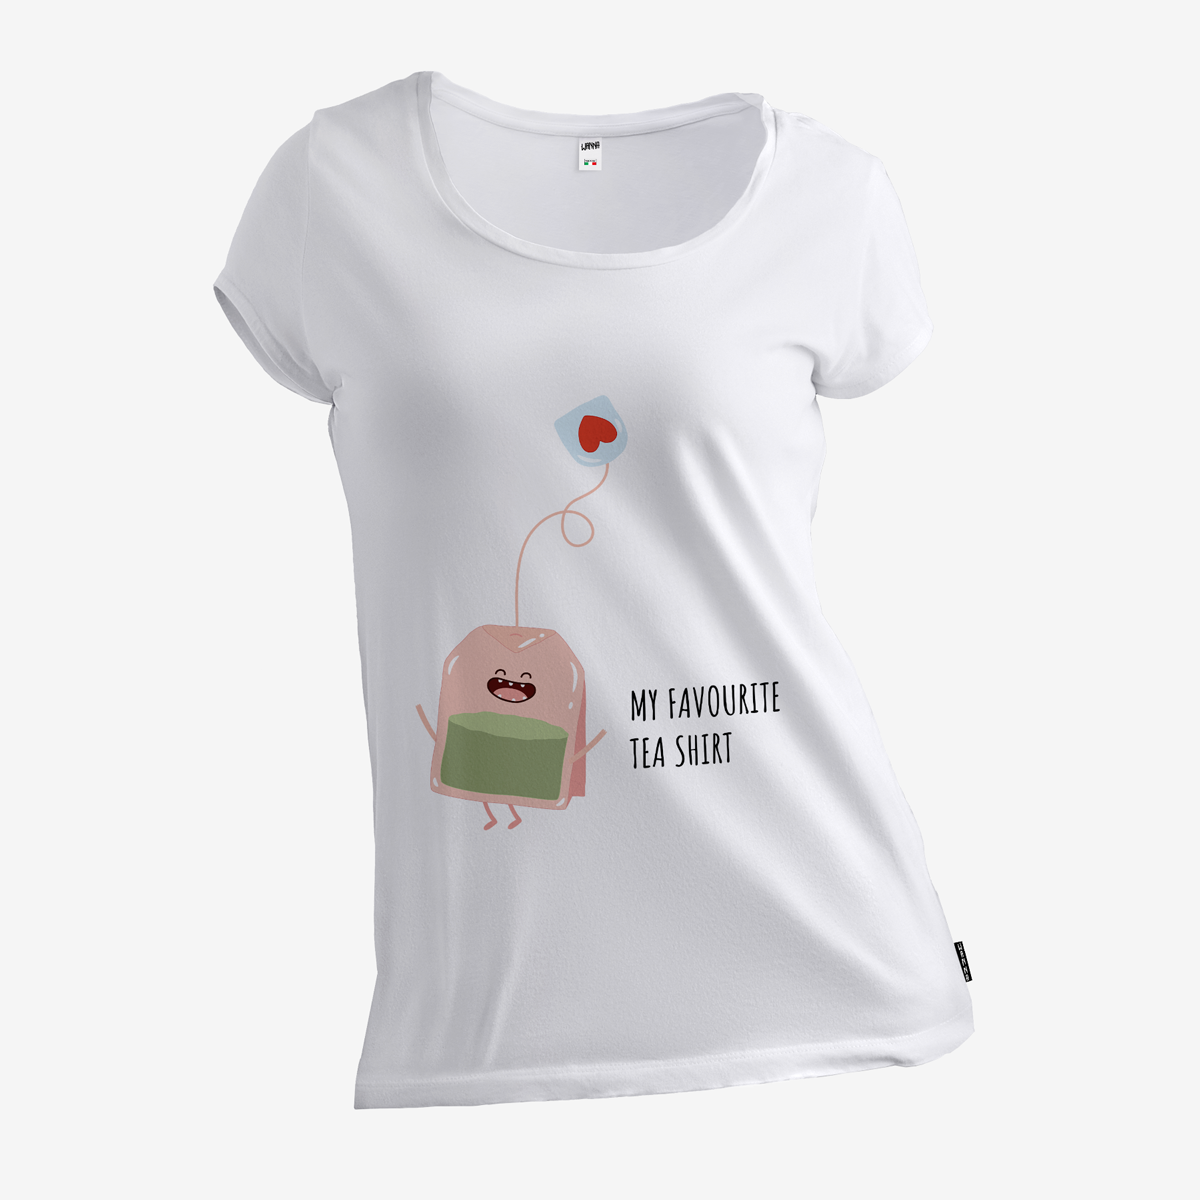 Teashirt - T-Shirt Donna